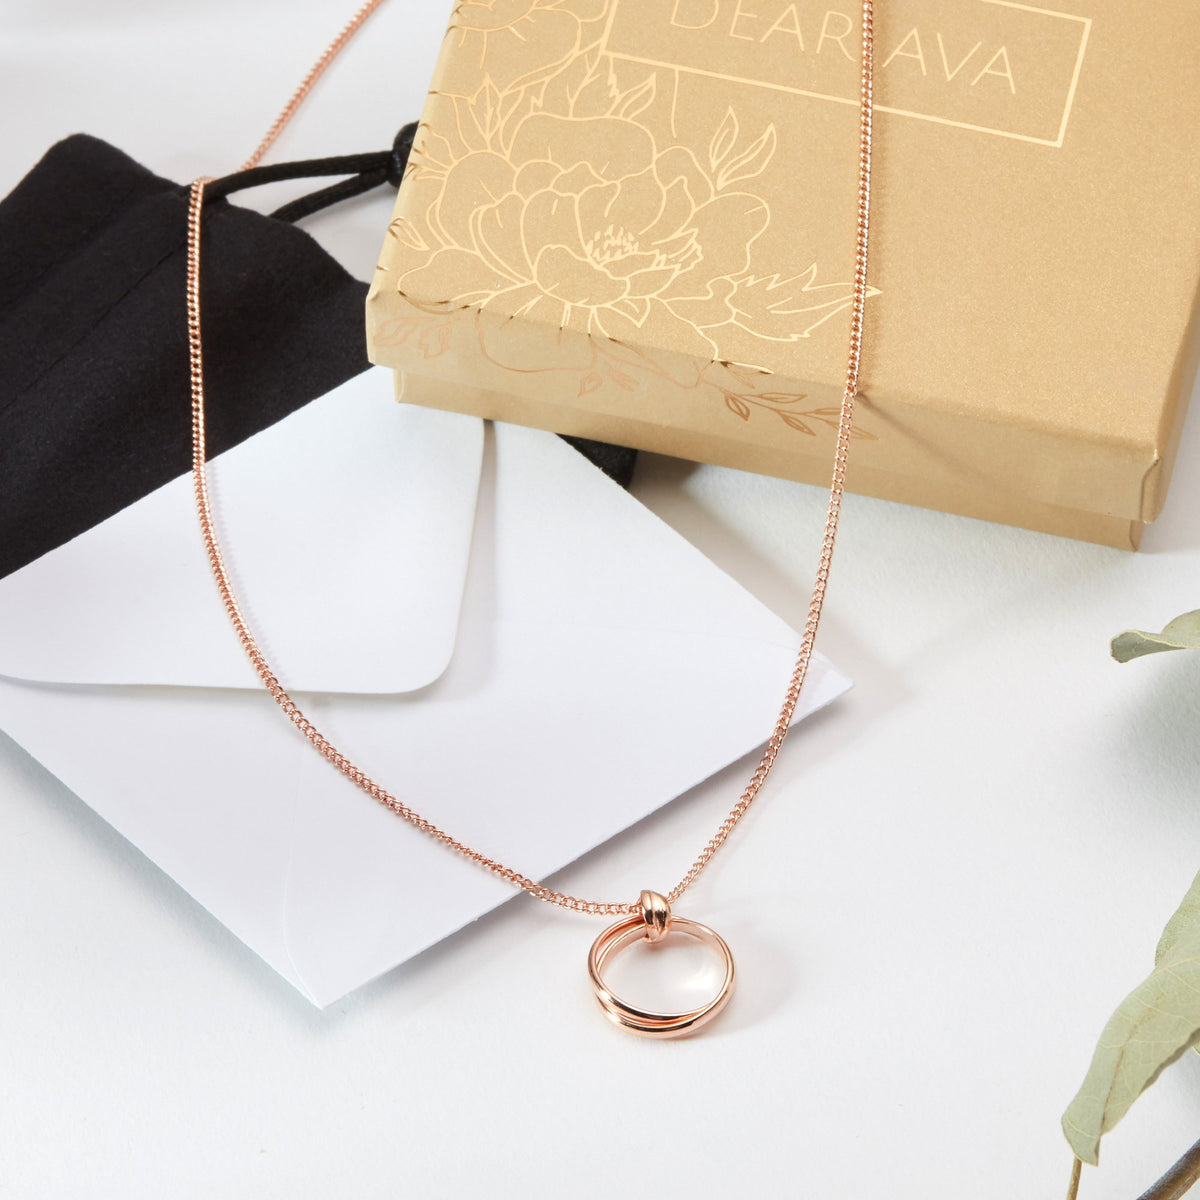 Motivational Necklace - Dear Ava, Jewelry / Necklaces / Pendants